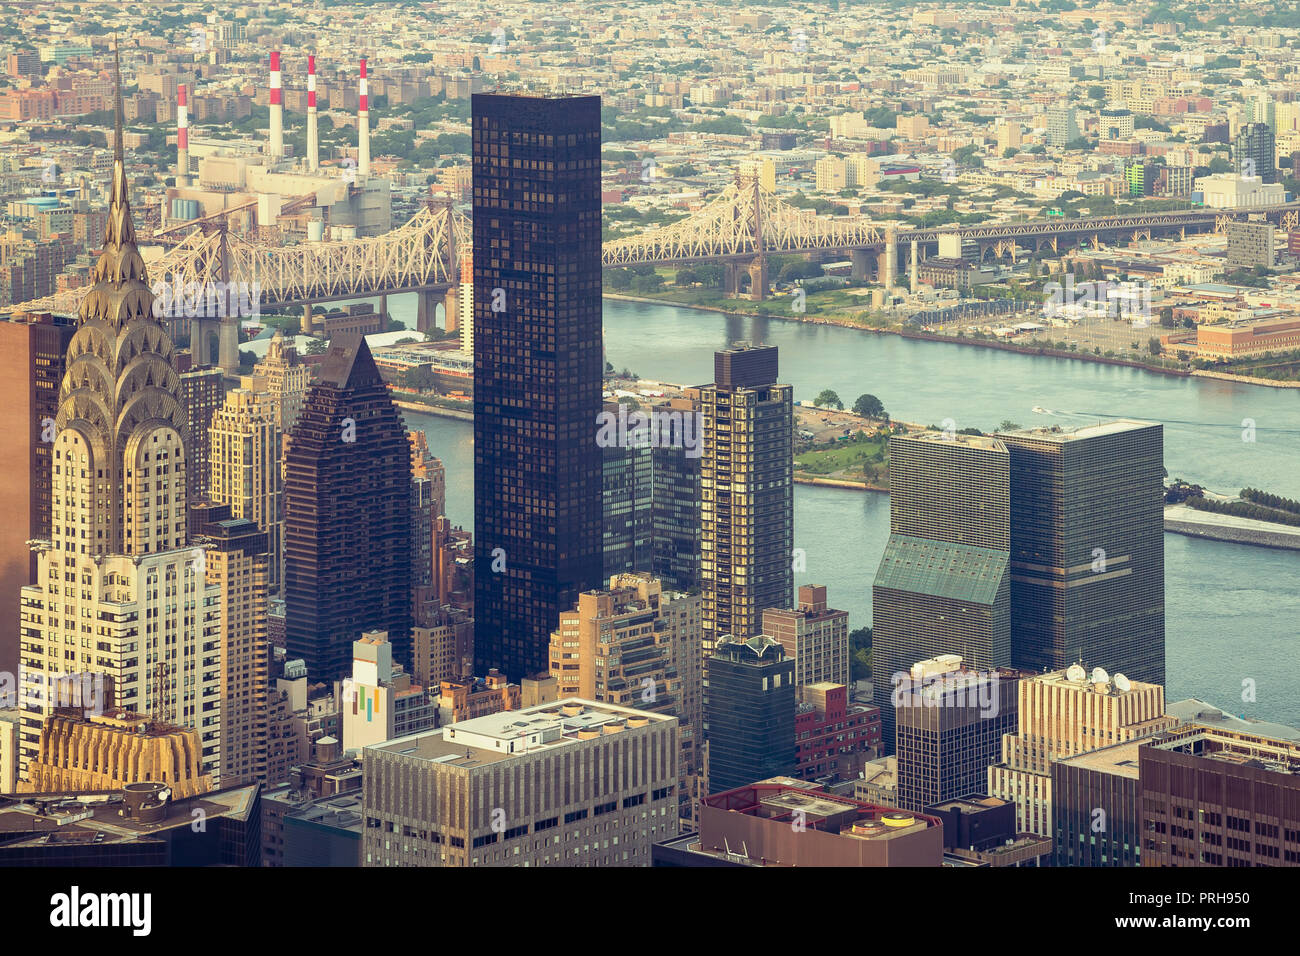 New York City skyscrapers street aerial view Stock Photo